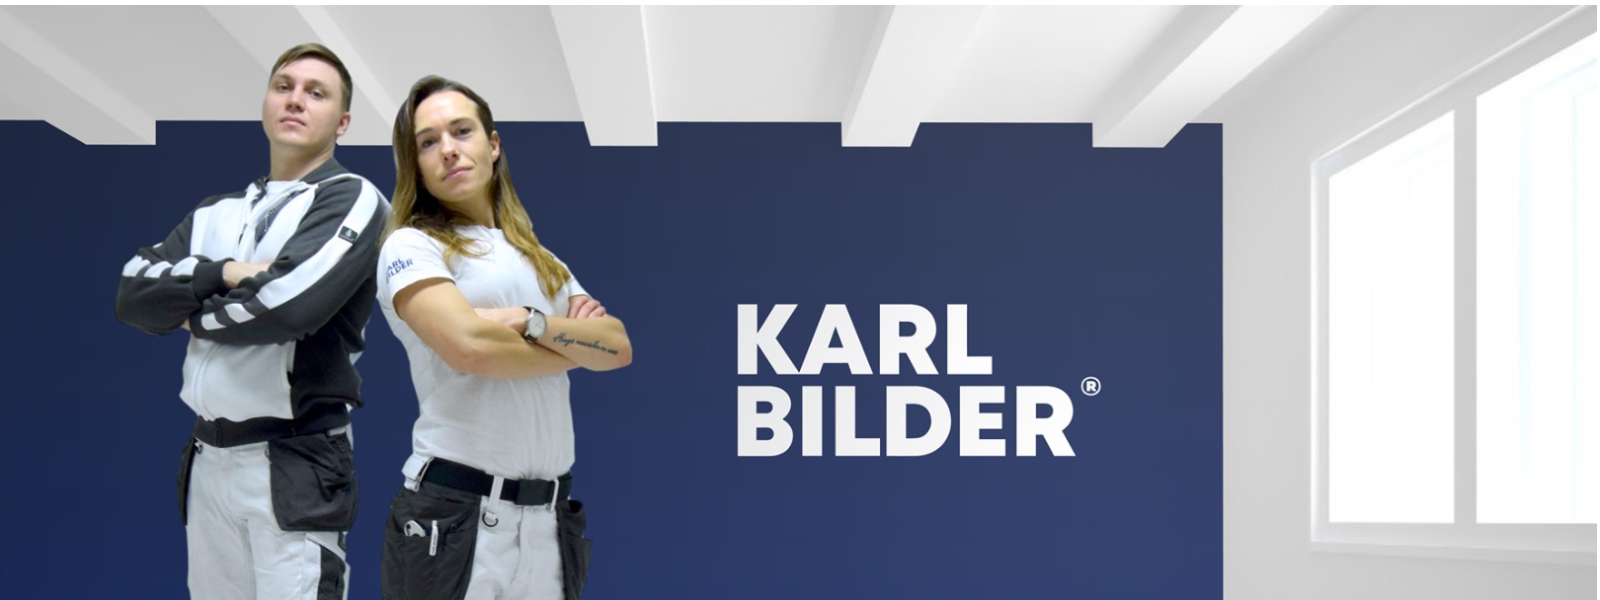 KARL BILDER OÜ - KARL BILDER is the official representative and distributor of high-quality German Wagner equipment in Es...